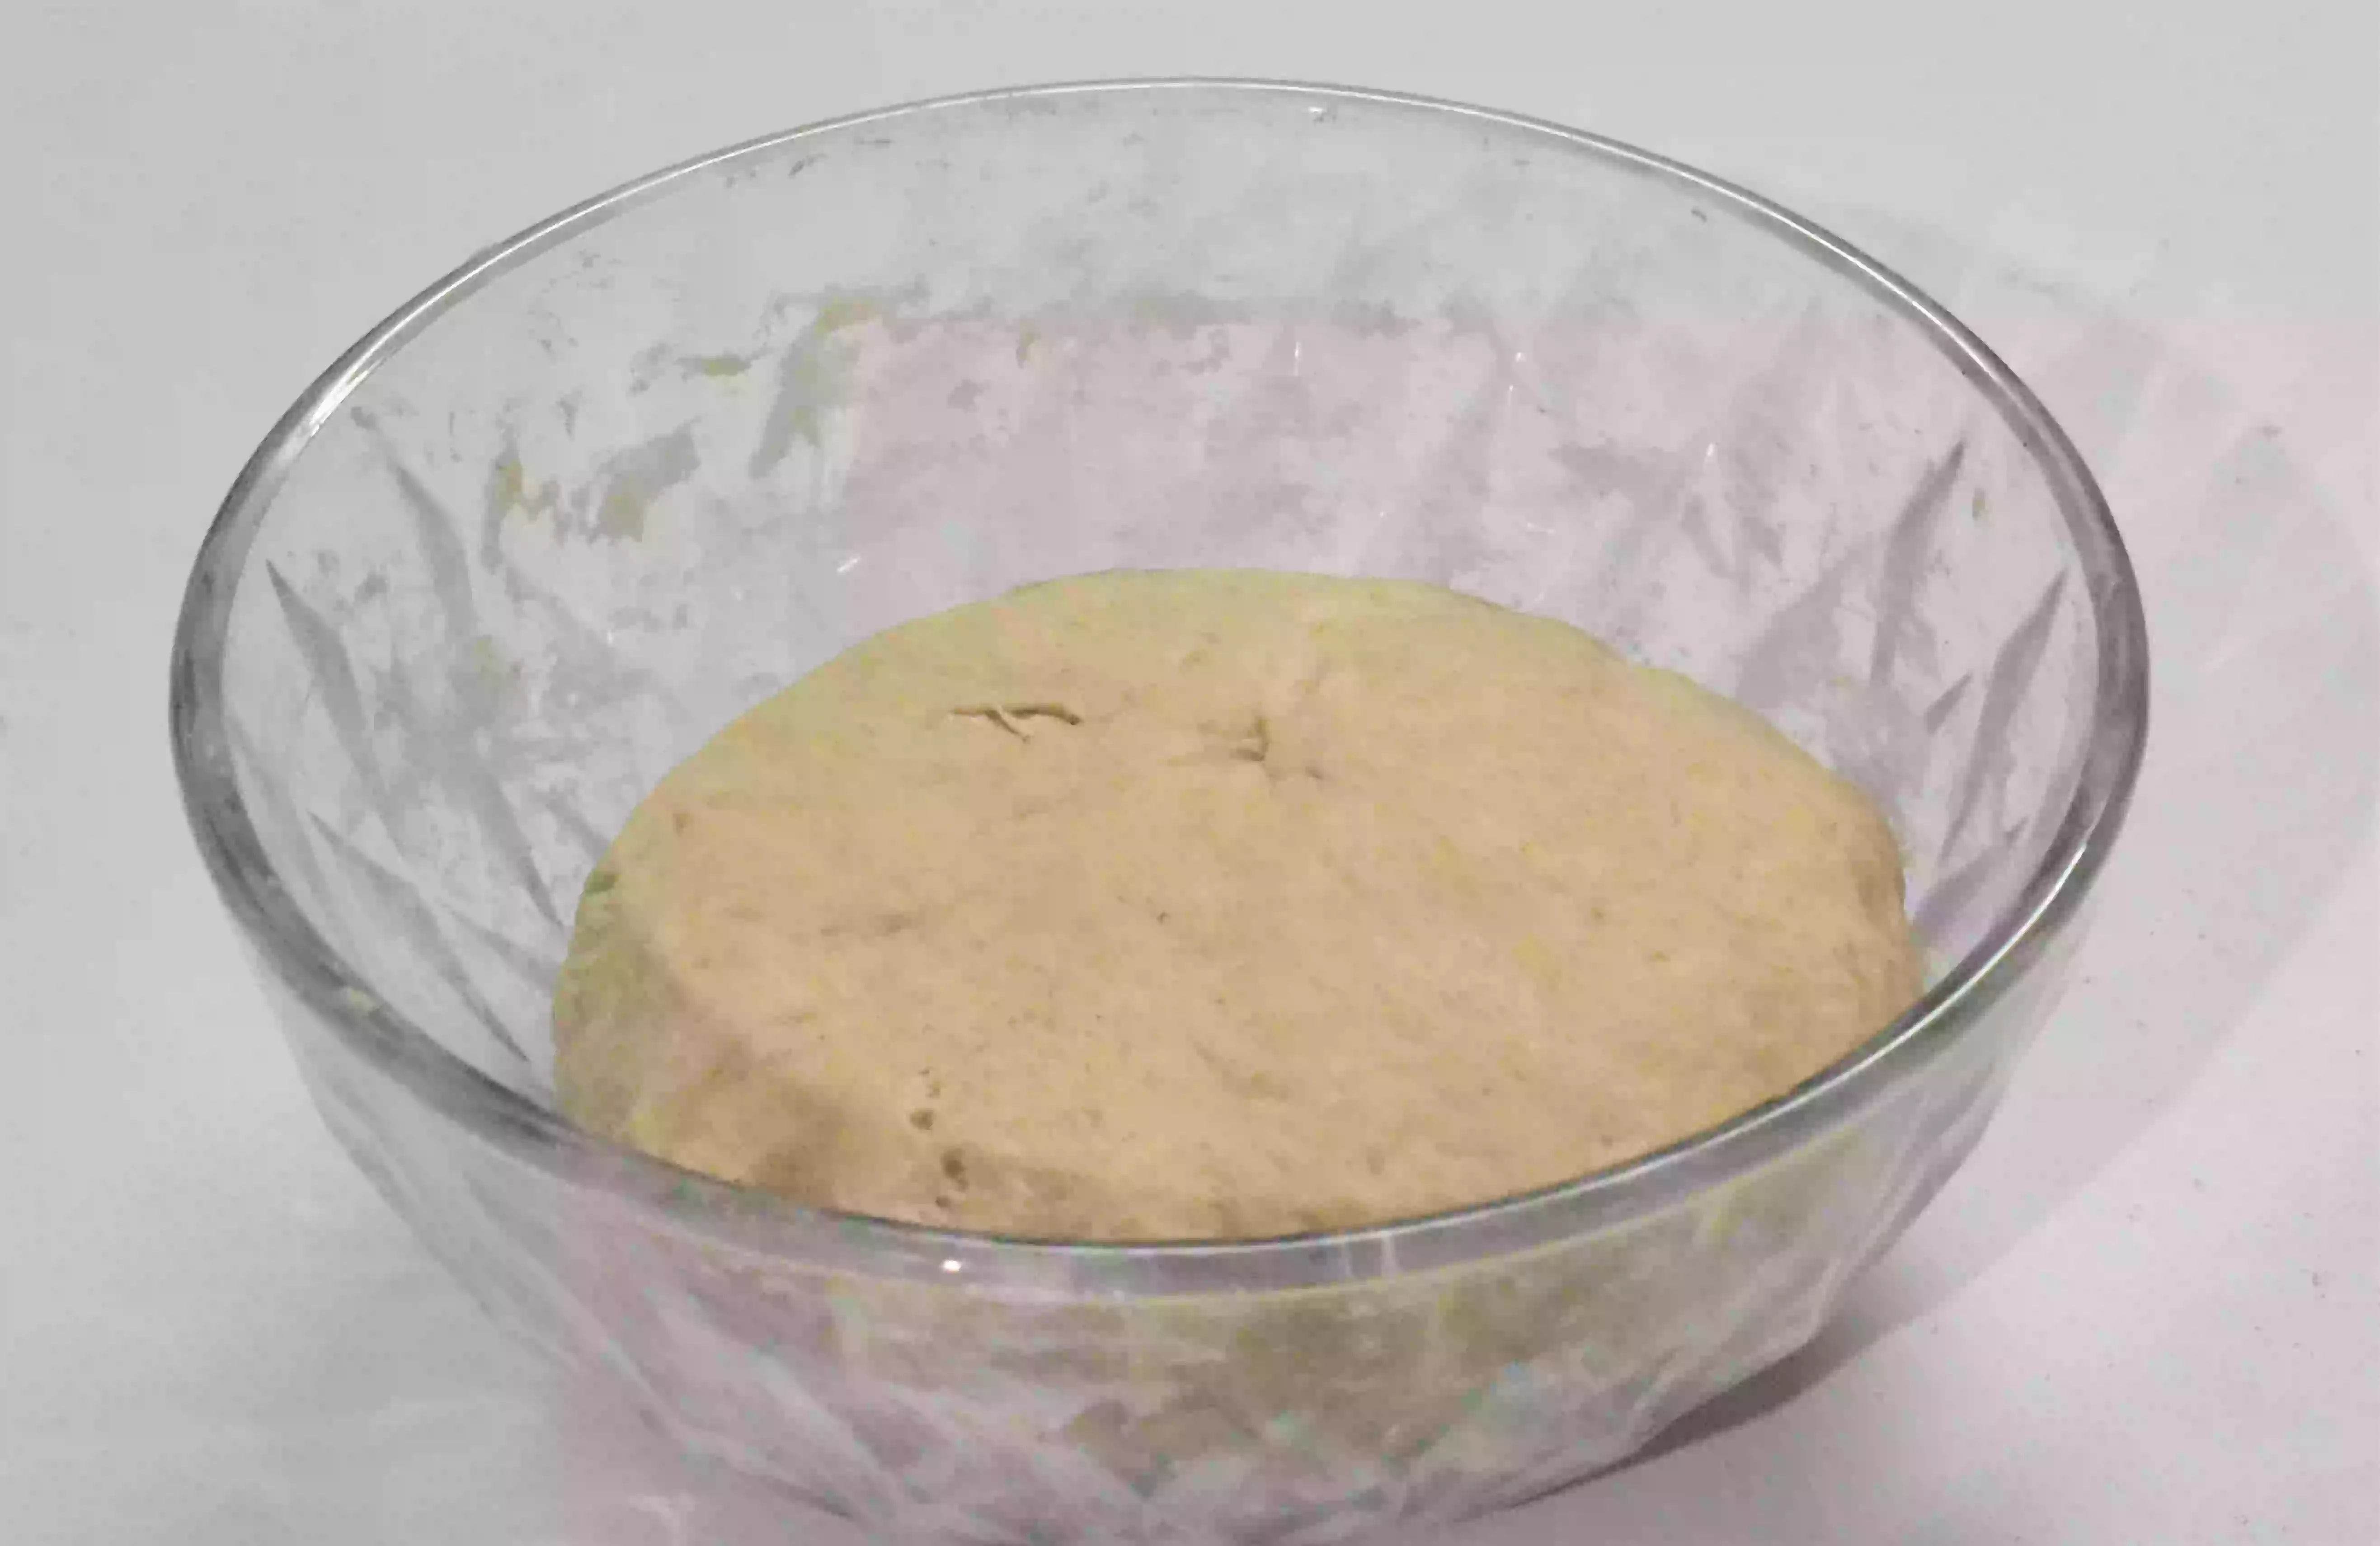 knead dough for 3 mins